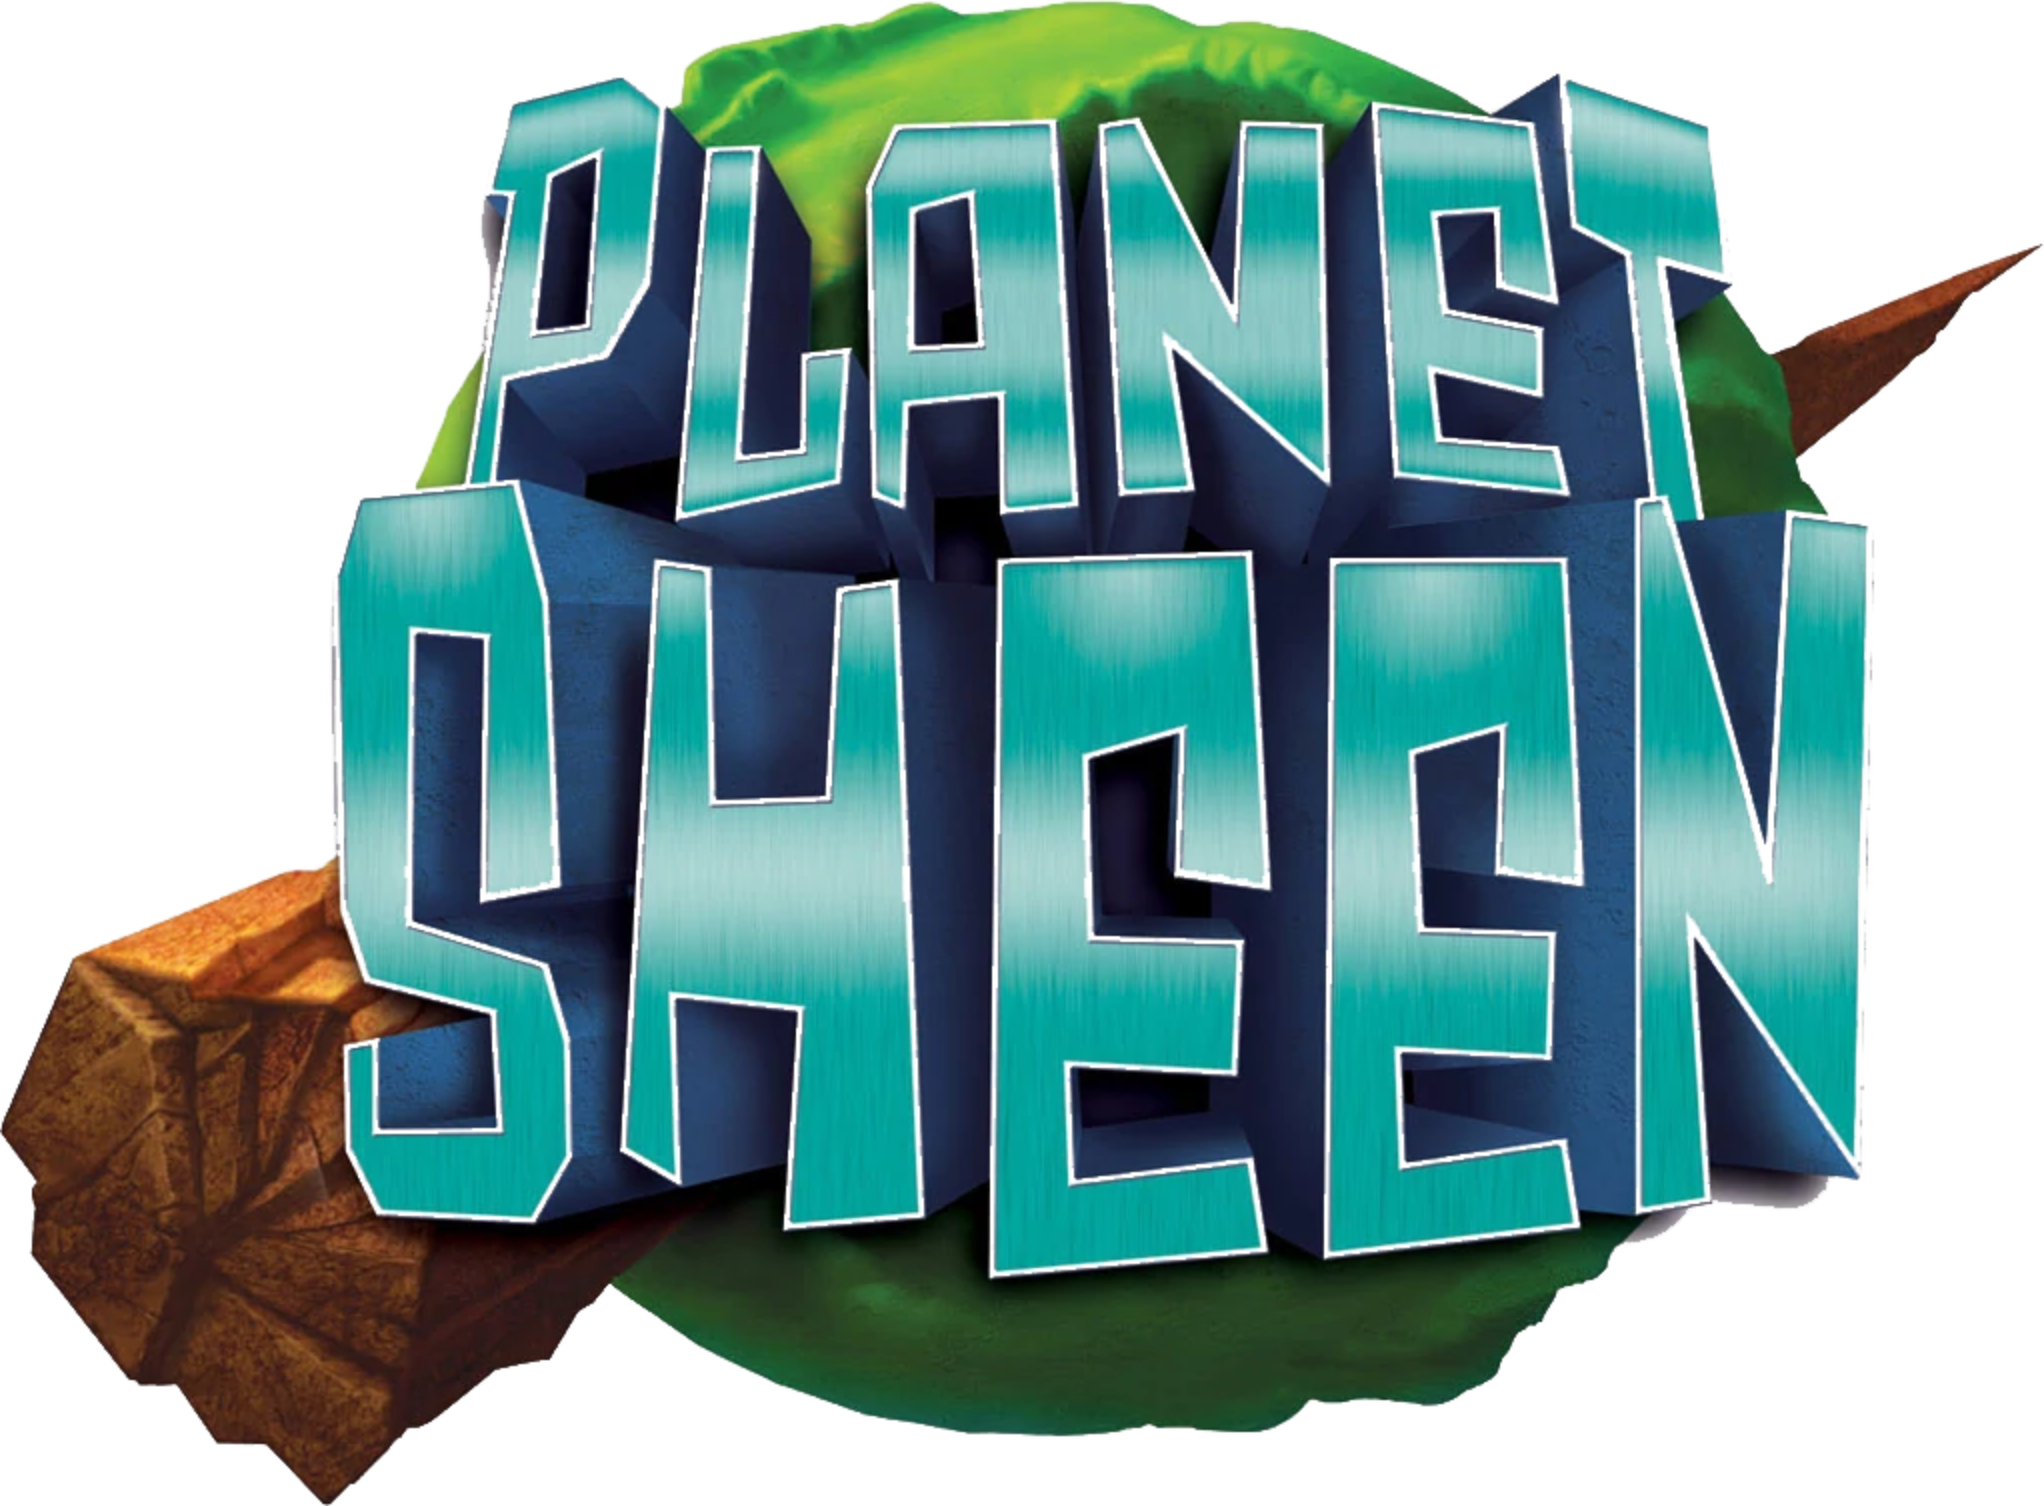 Planet Sheen Complete (3 DVDs Box Set)